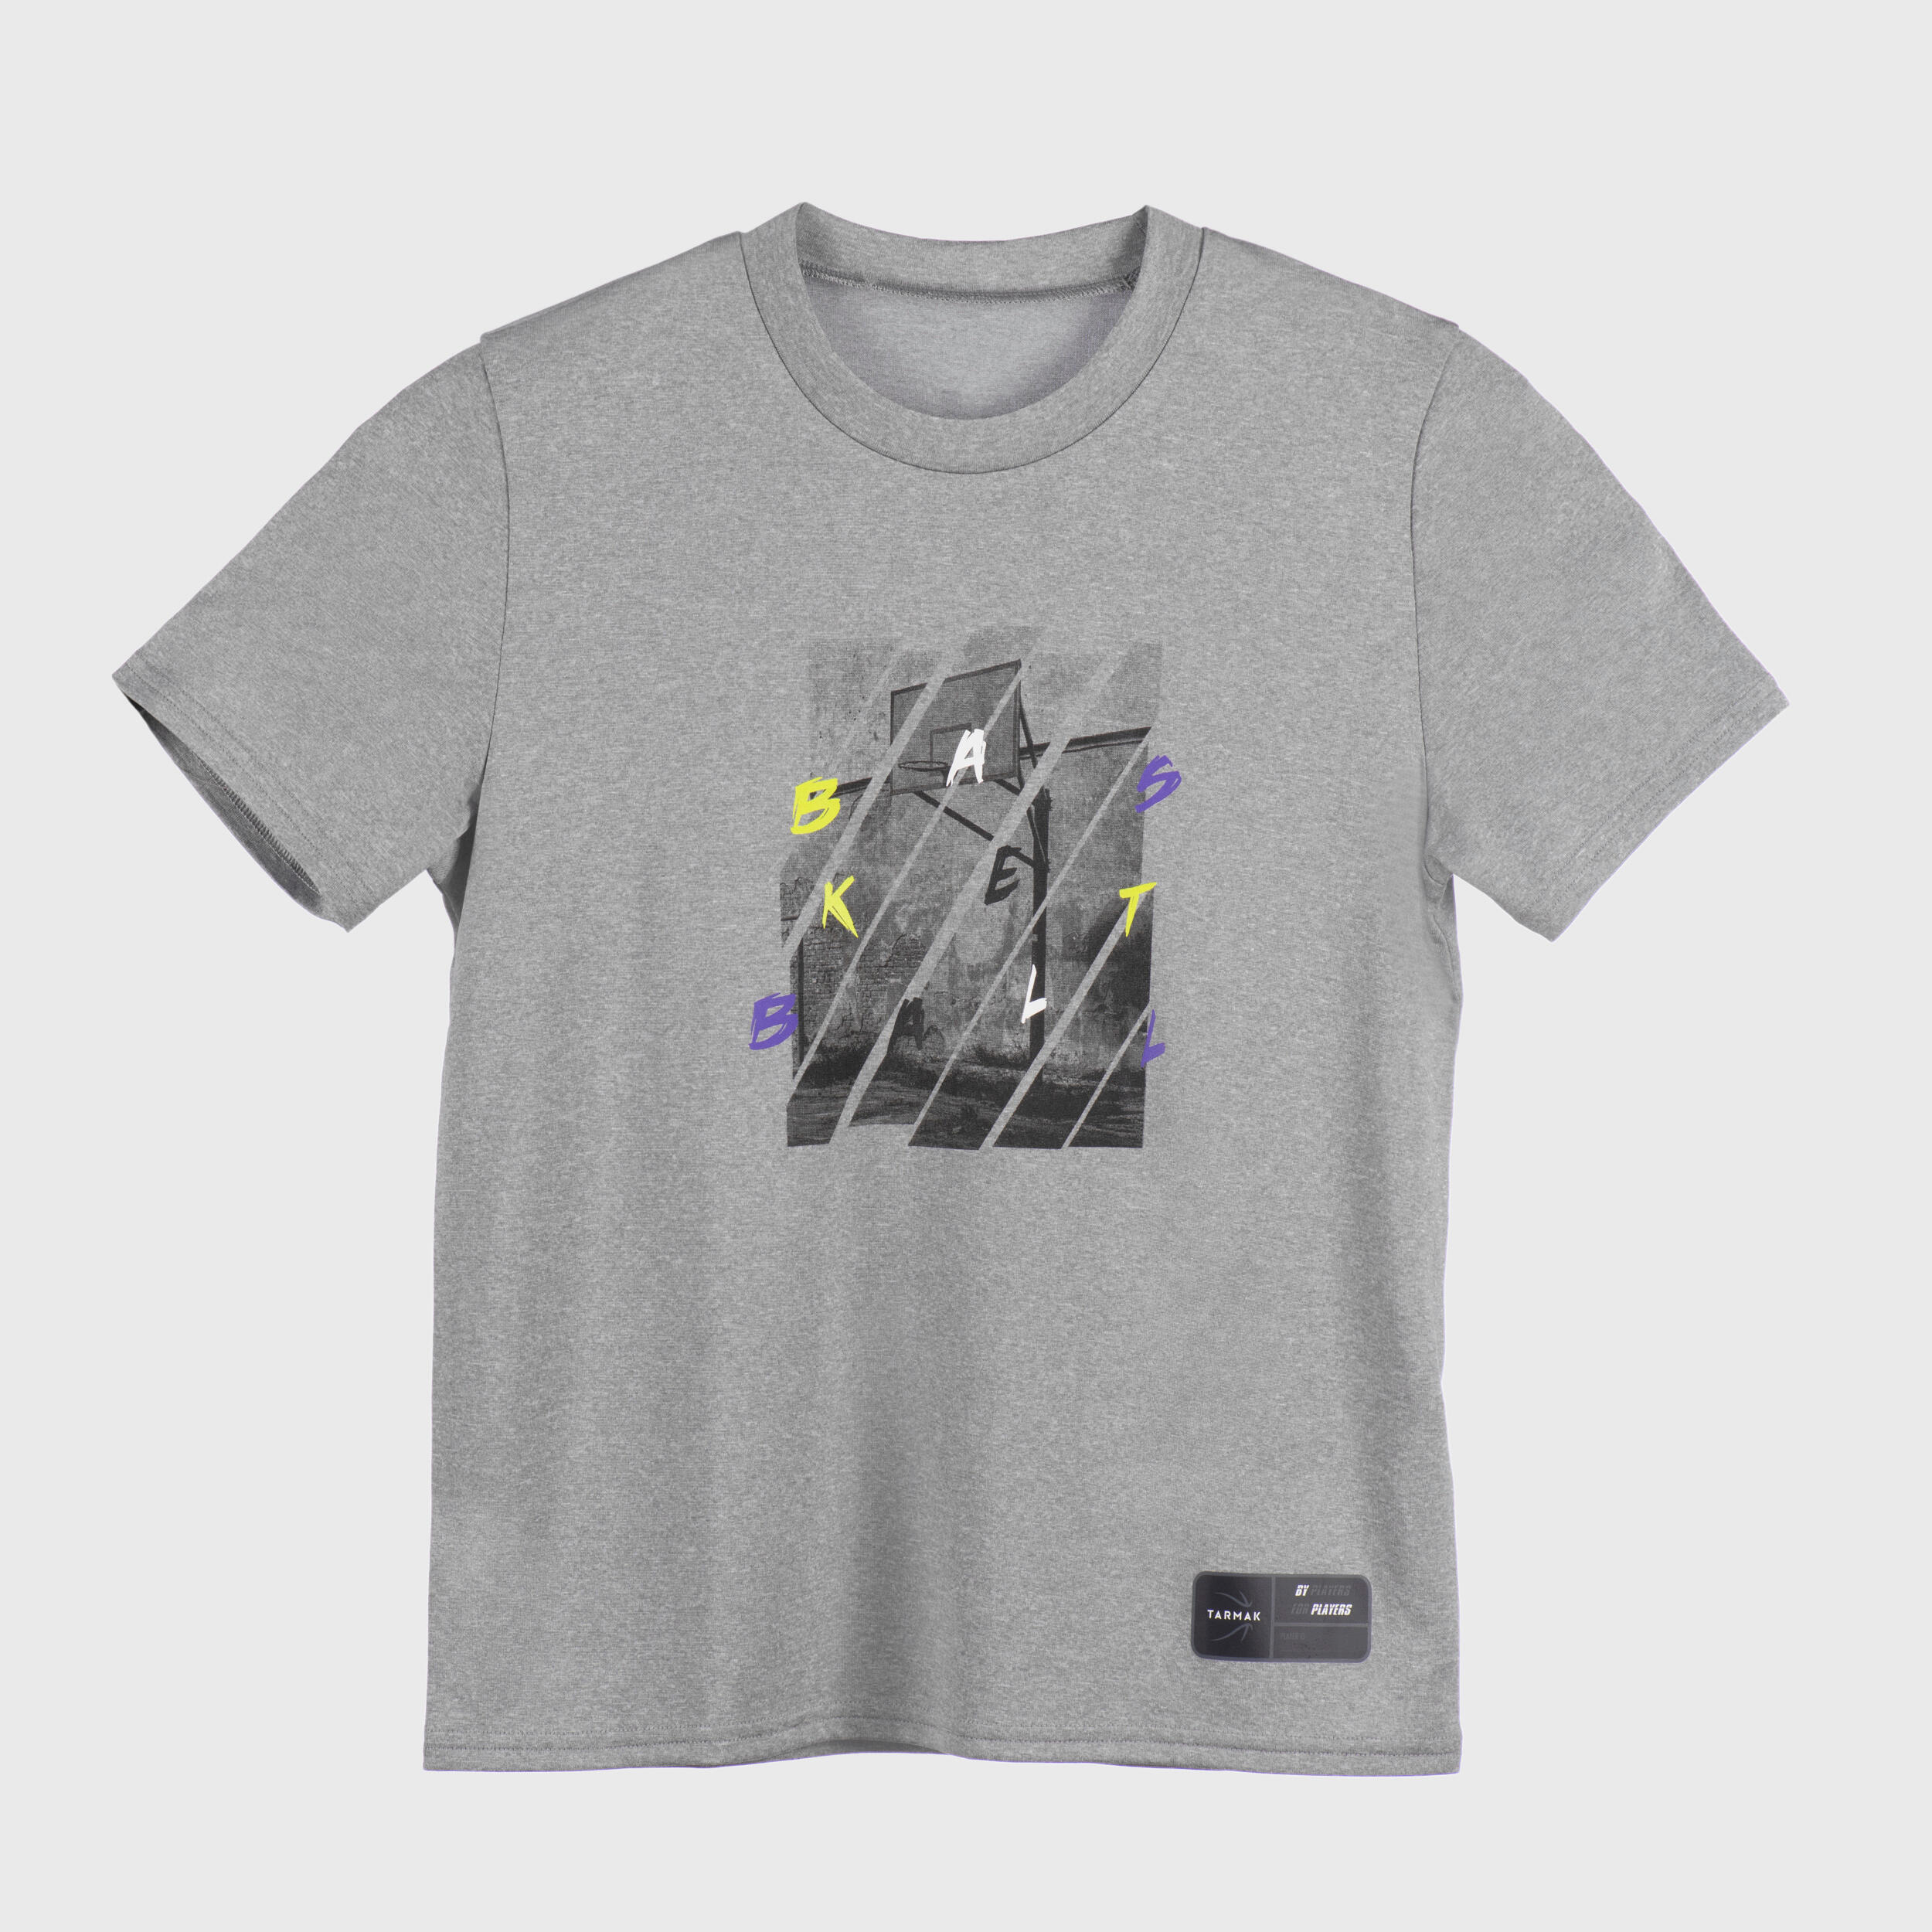 Kids' Basketball T-Shirt / Jersey TS500 Fast - Light Grey 4/7